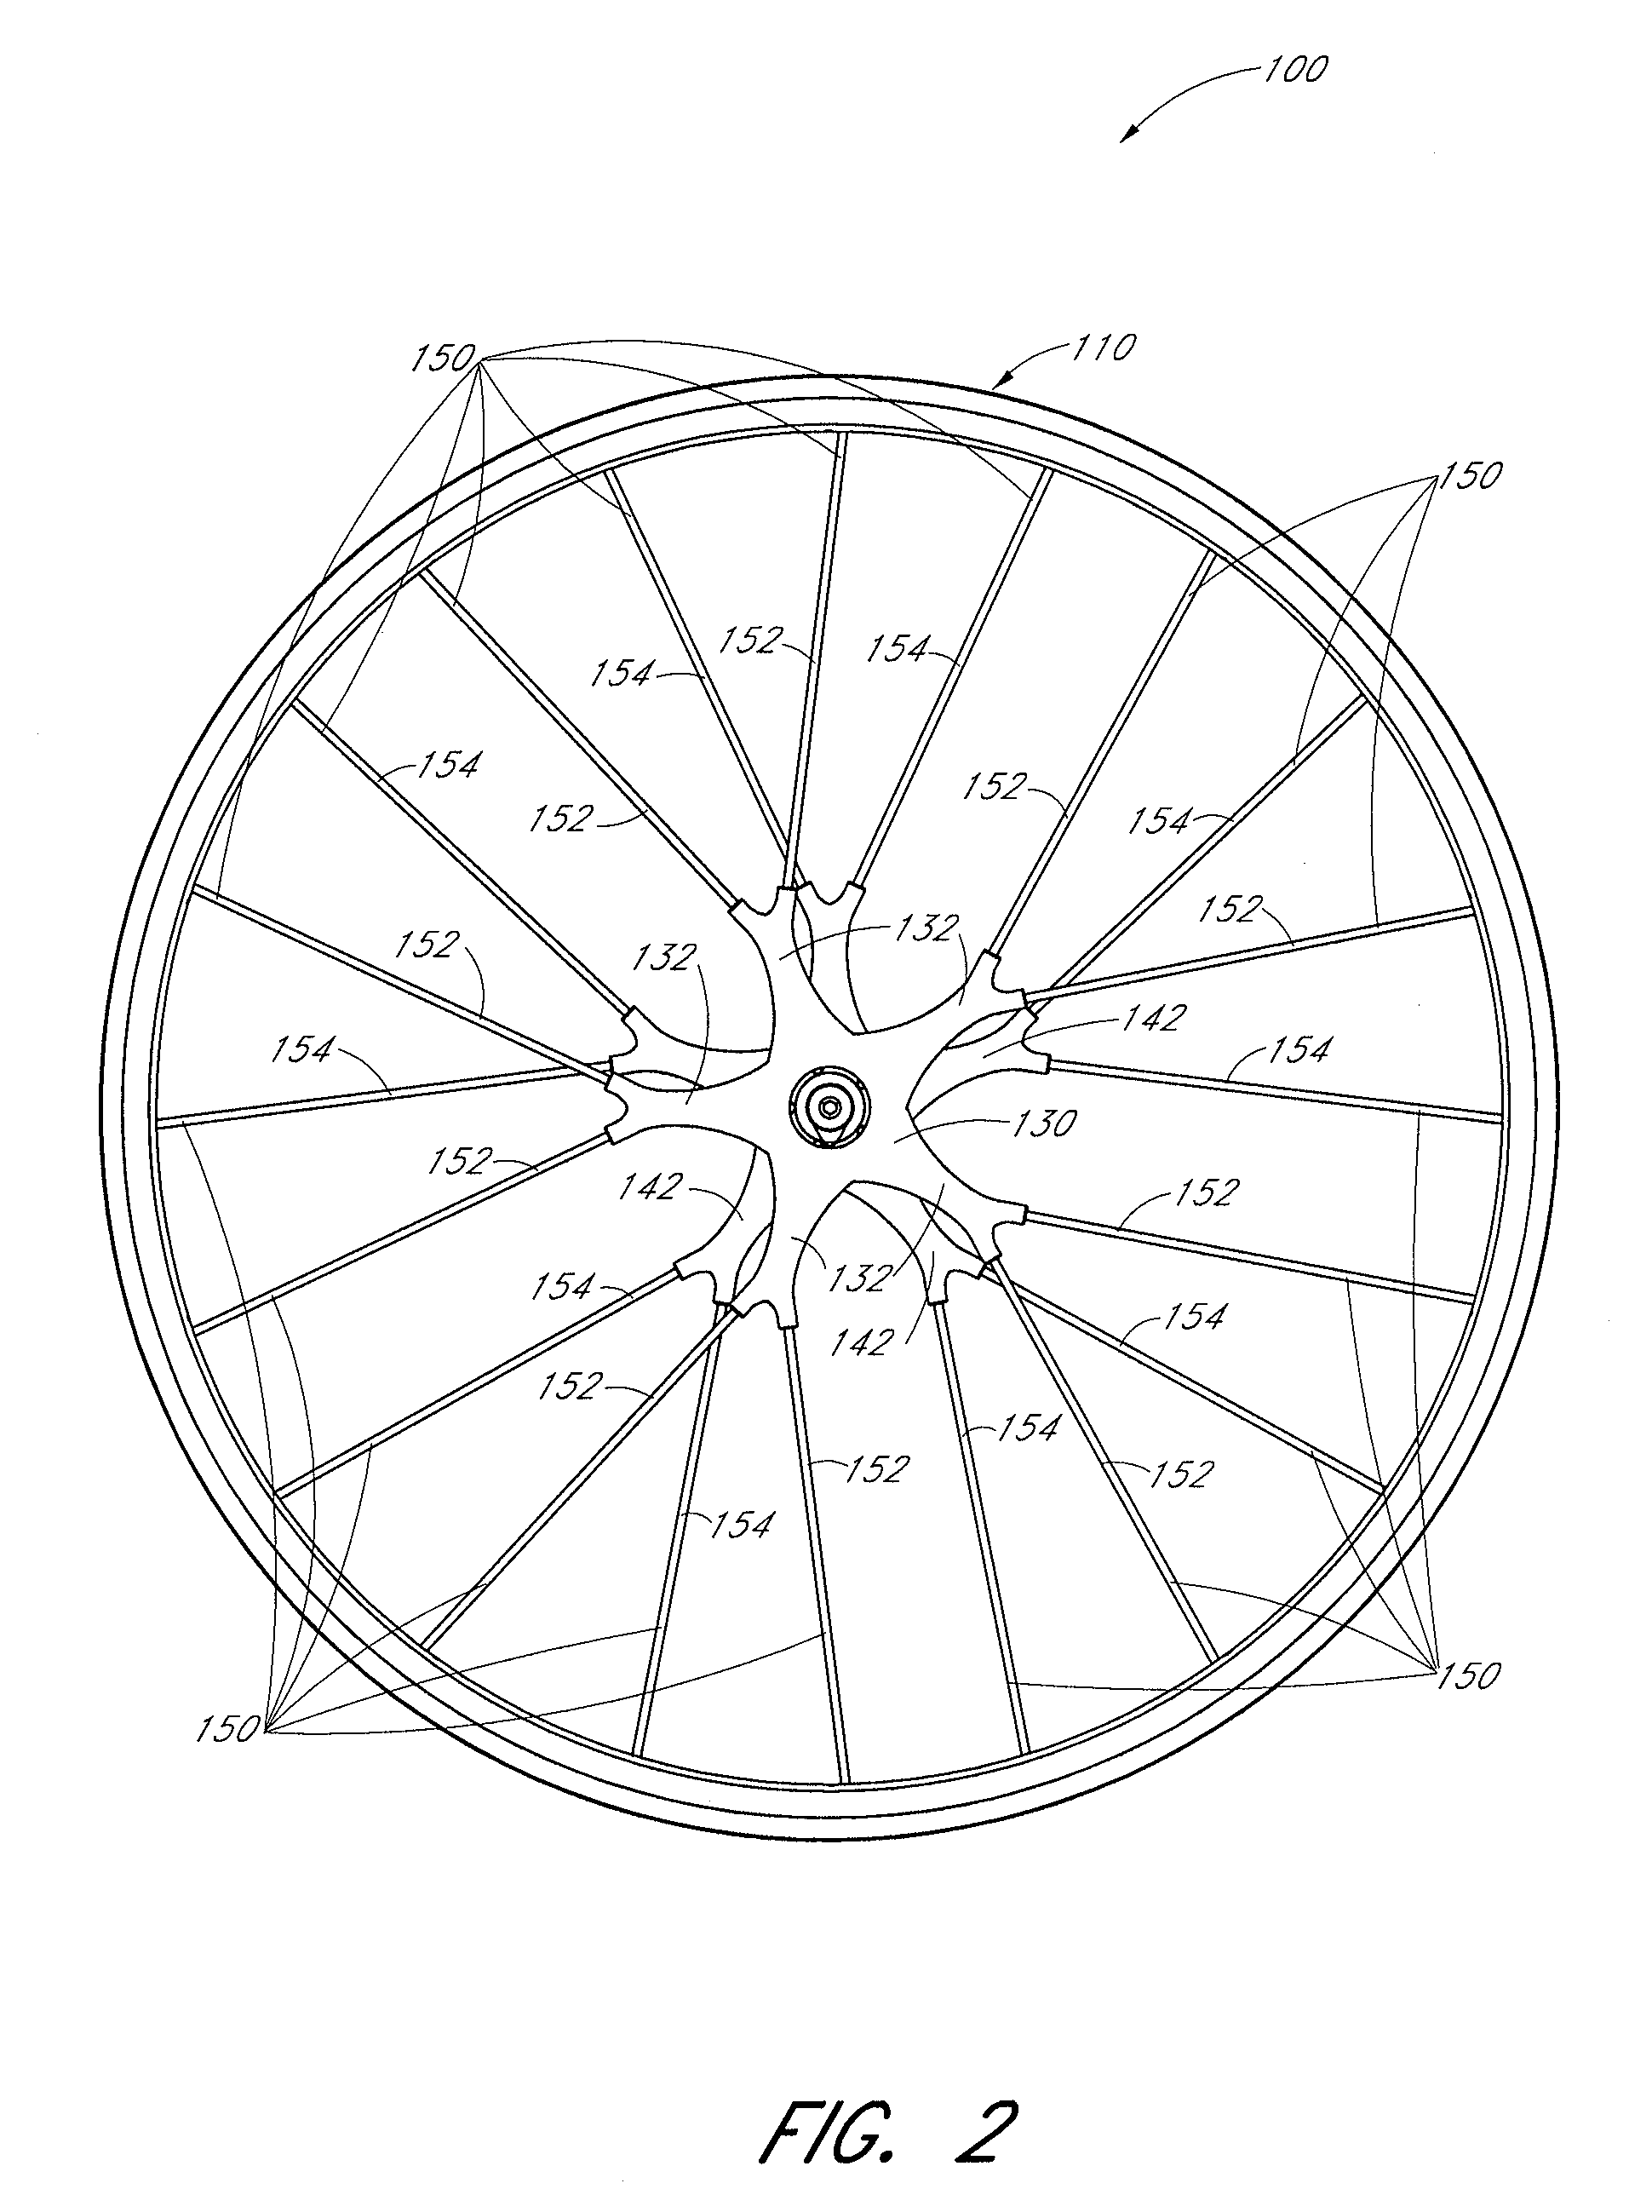 Bicycle wheel and hub